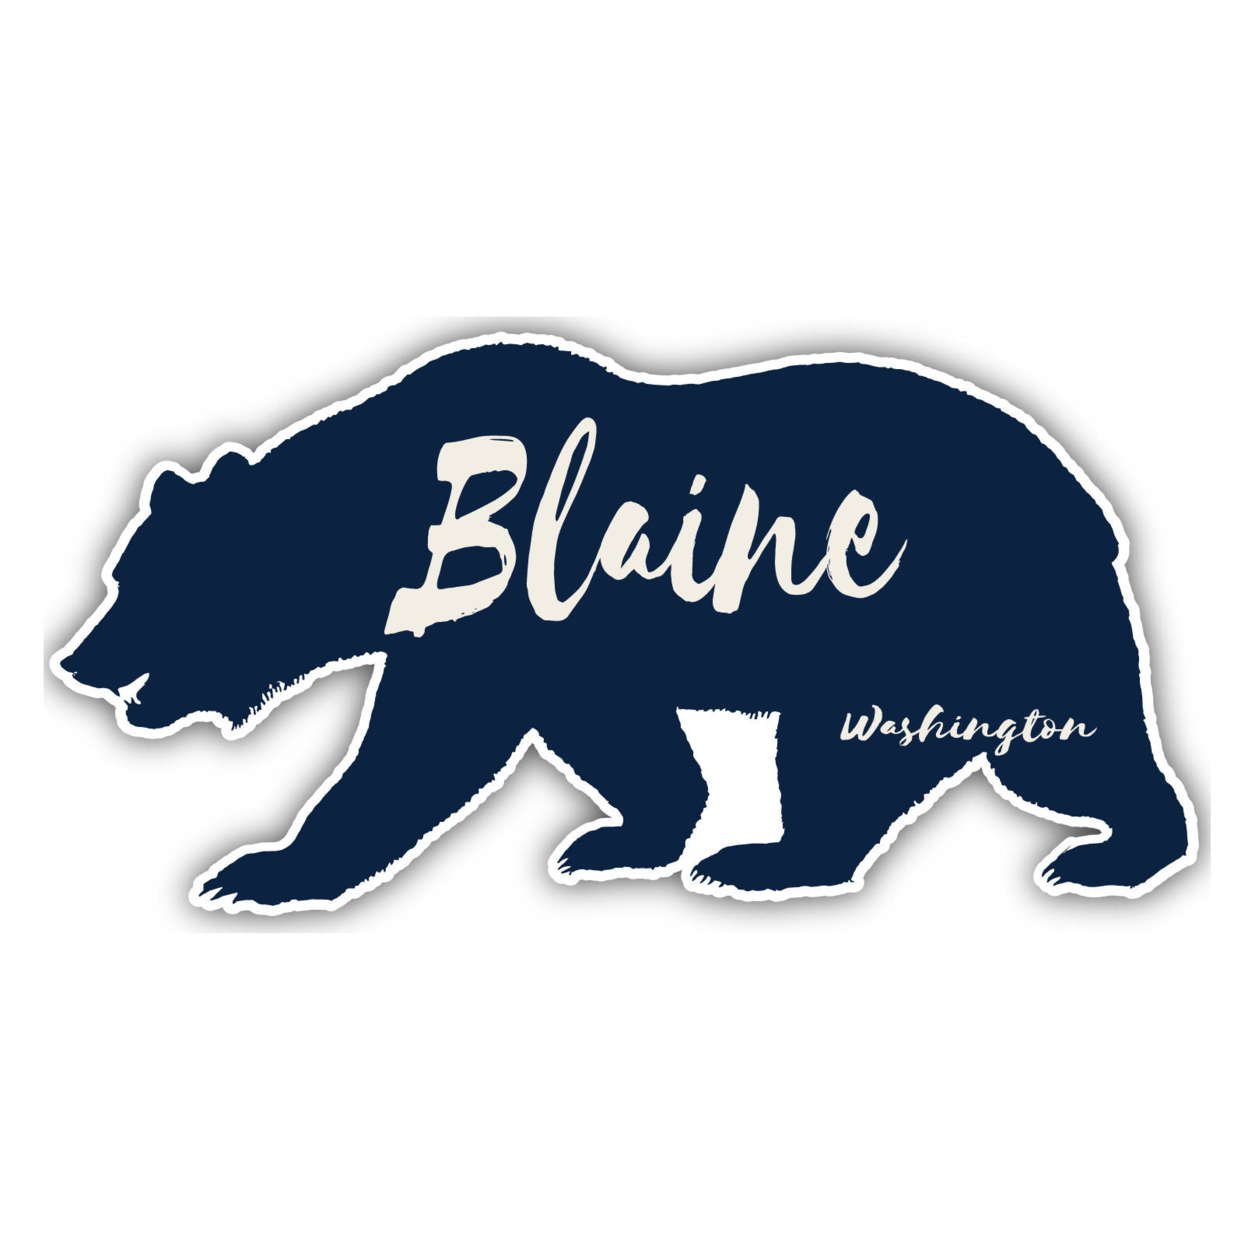 Blaine Washington Souvenir Decorative Stickers (Choose Theme And Size) - Single Unit, 12-Inch, Adventures Awaits